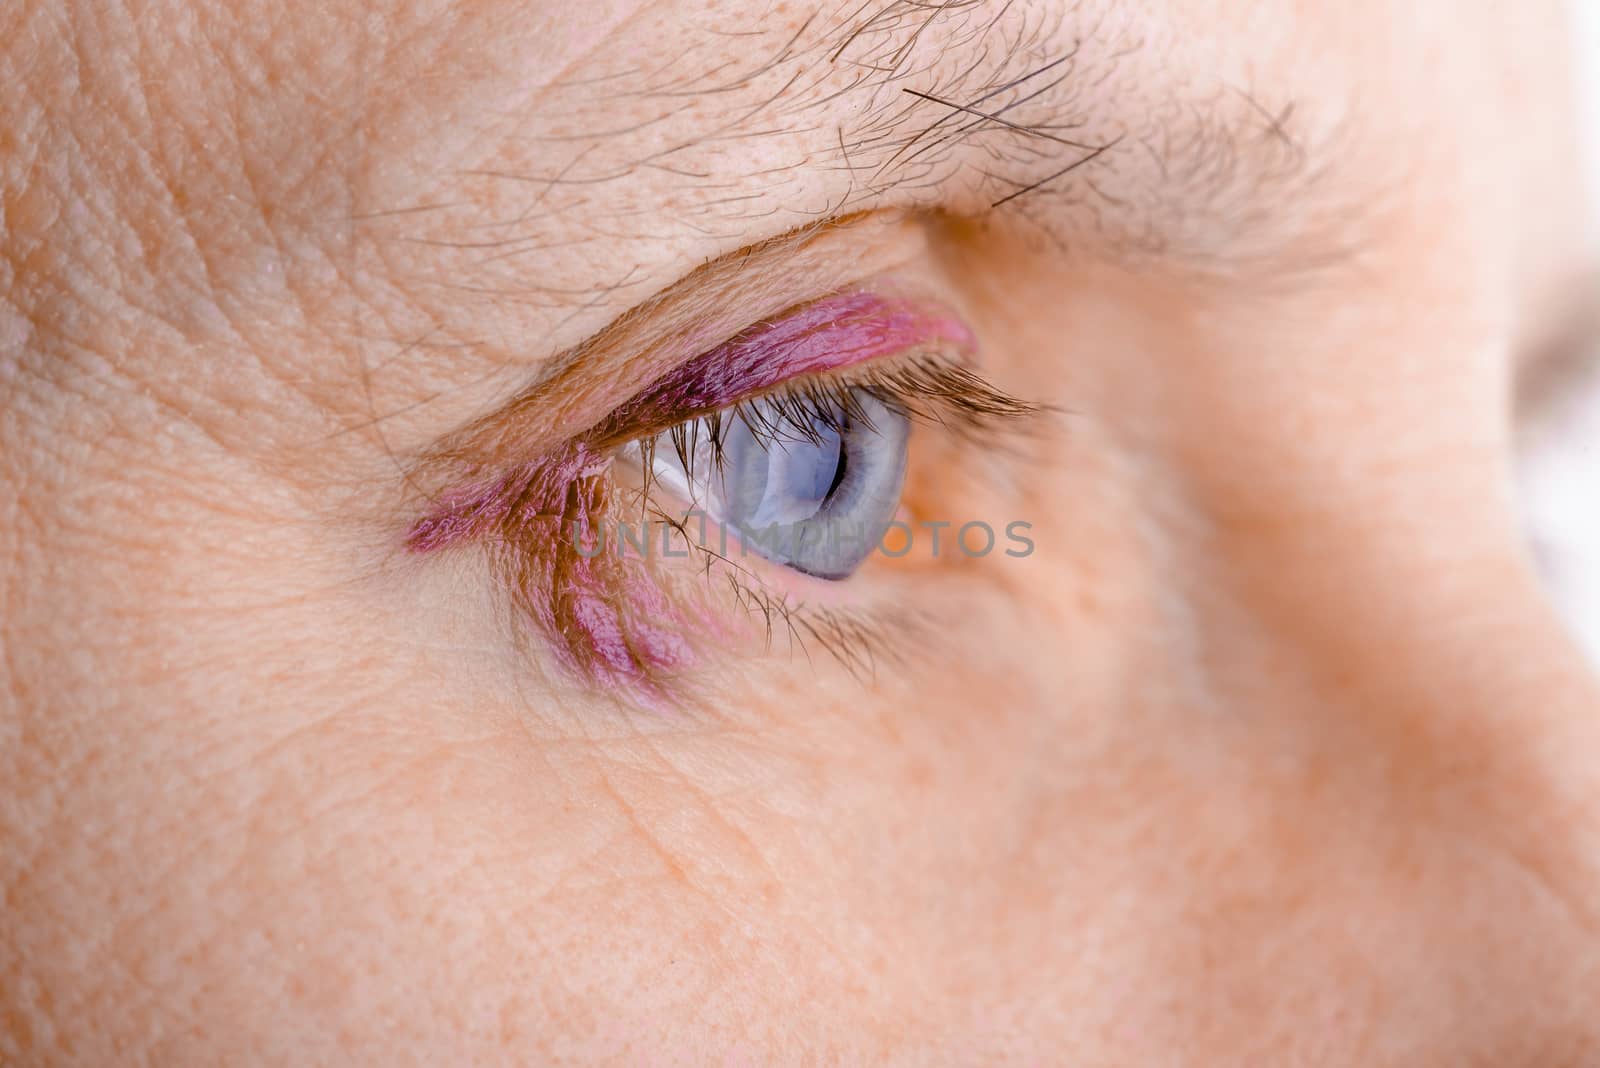 Injured eye due to capillary rupture by MaxalTamor